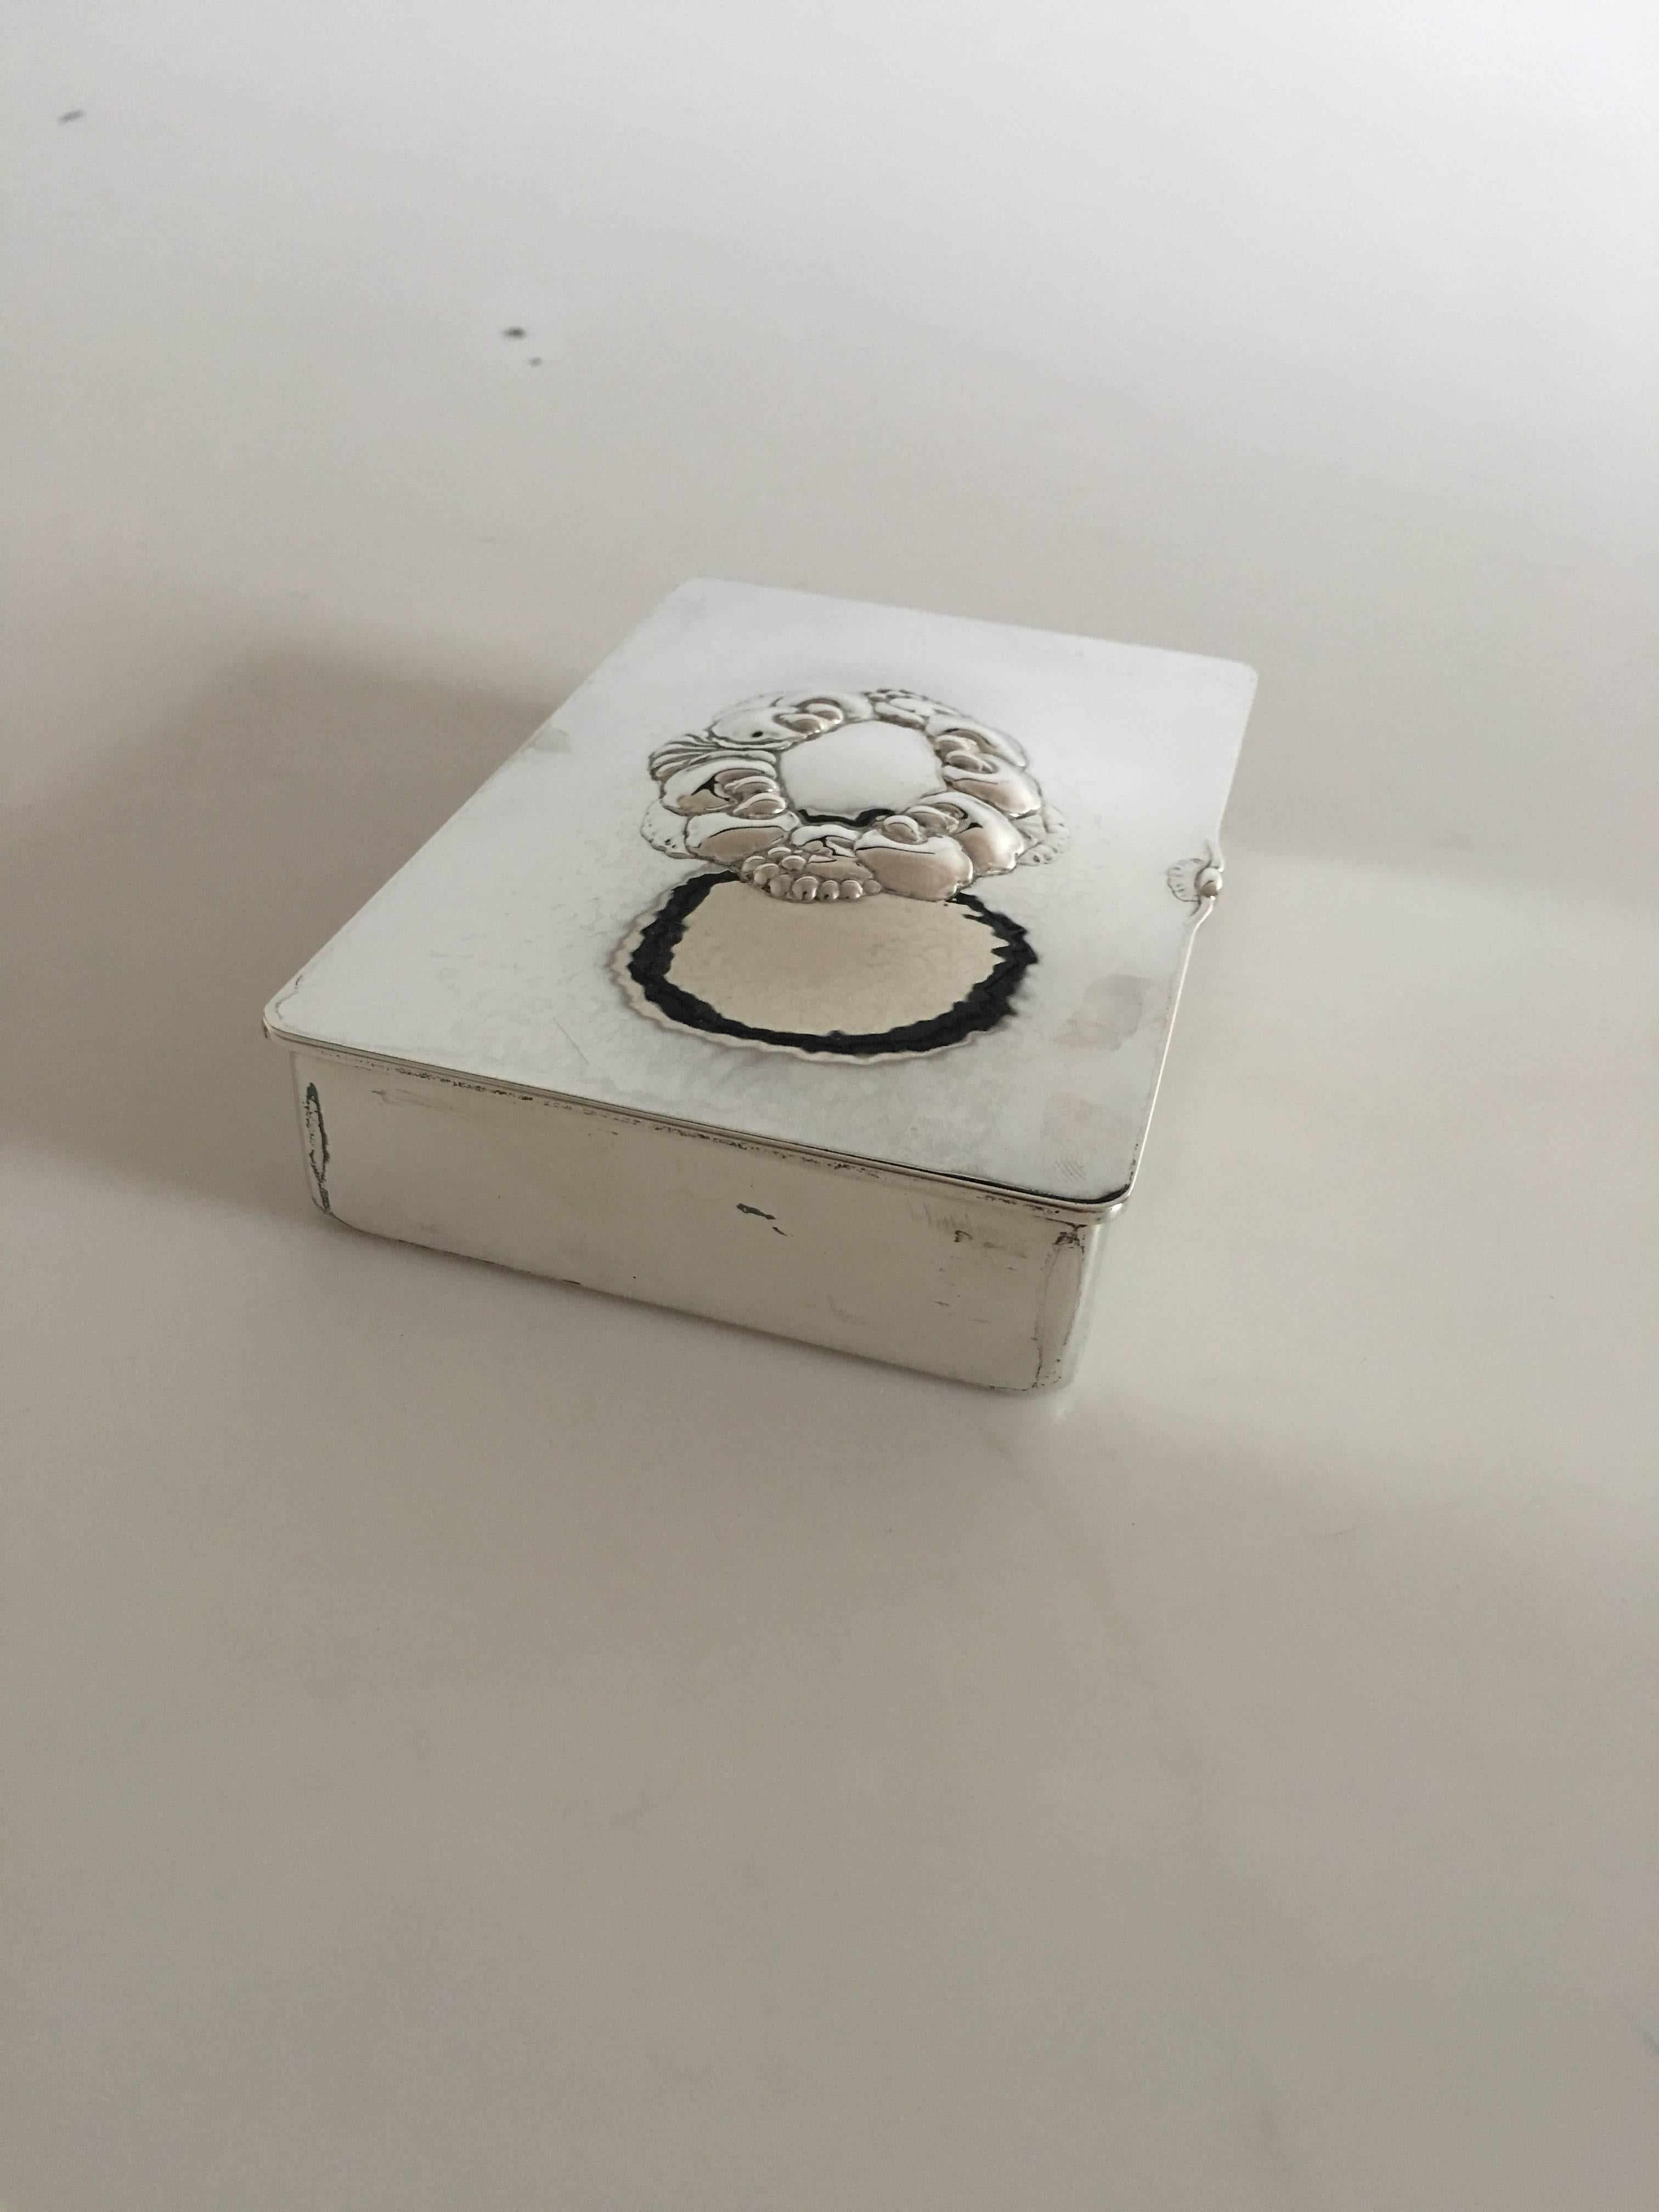 Georg Jensen Sterling Silver Box or Cigarette Box #507A For Sale 1